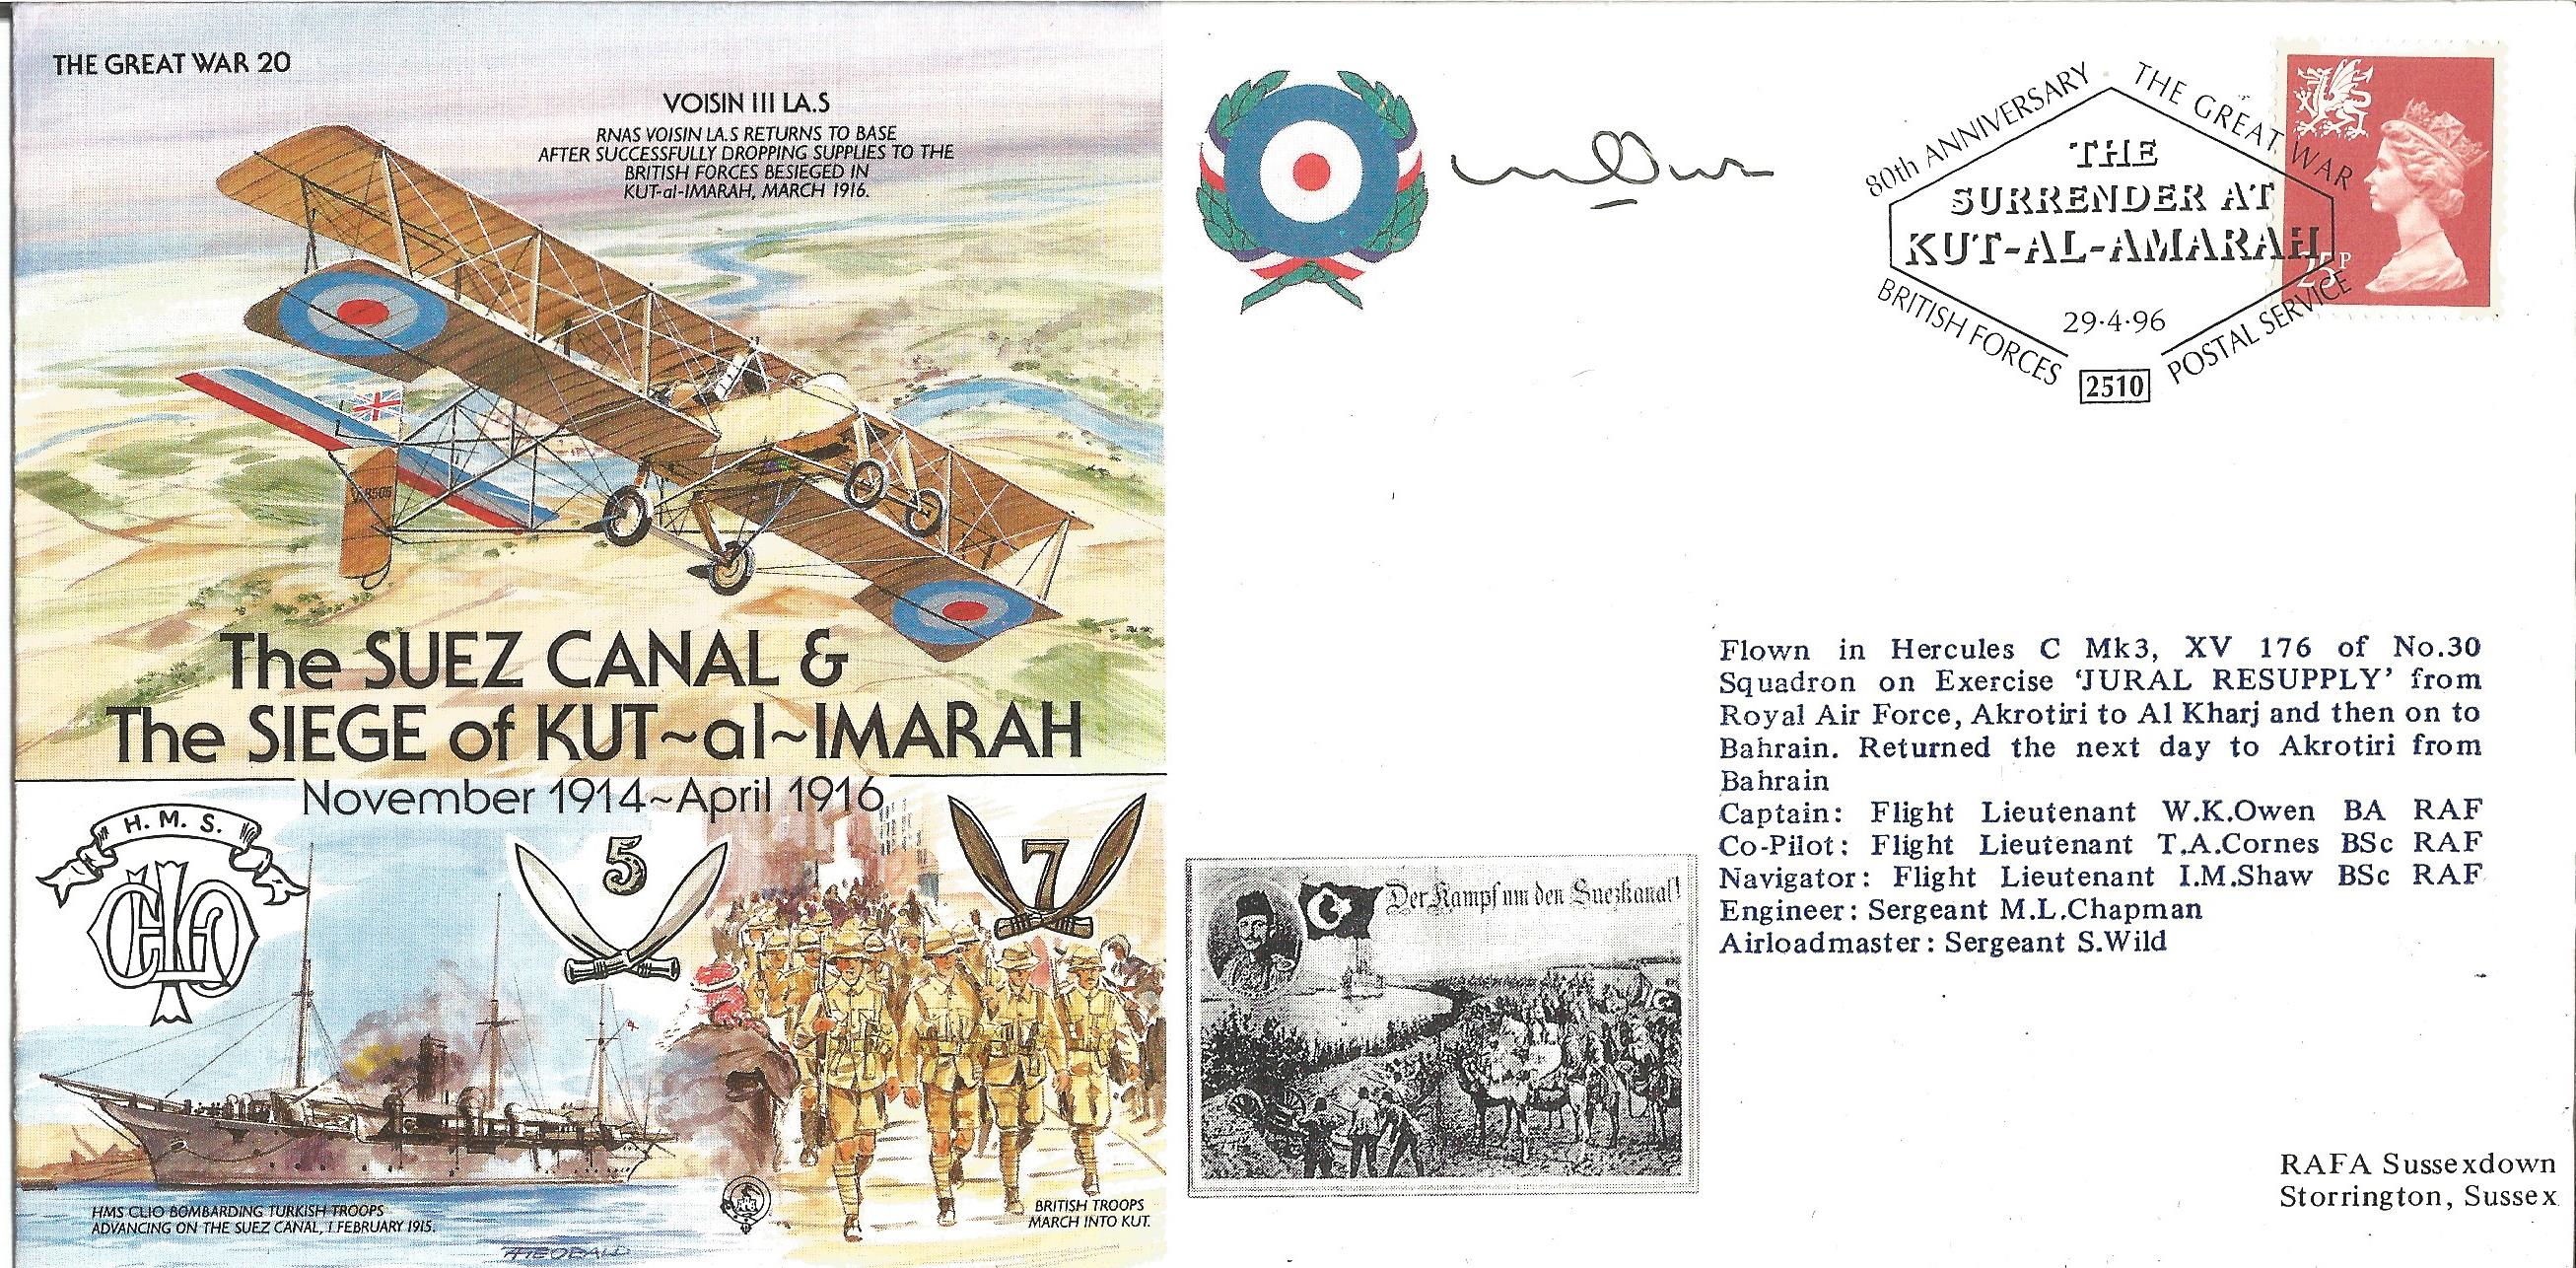 Great War flown cover The Suez Canal &The Siege of Kut -al-Imarah signed by Flight Lieutenant W.